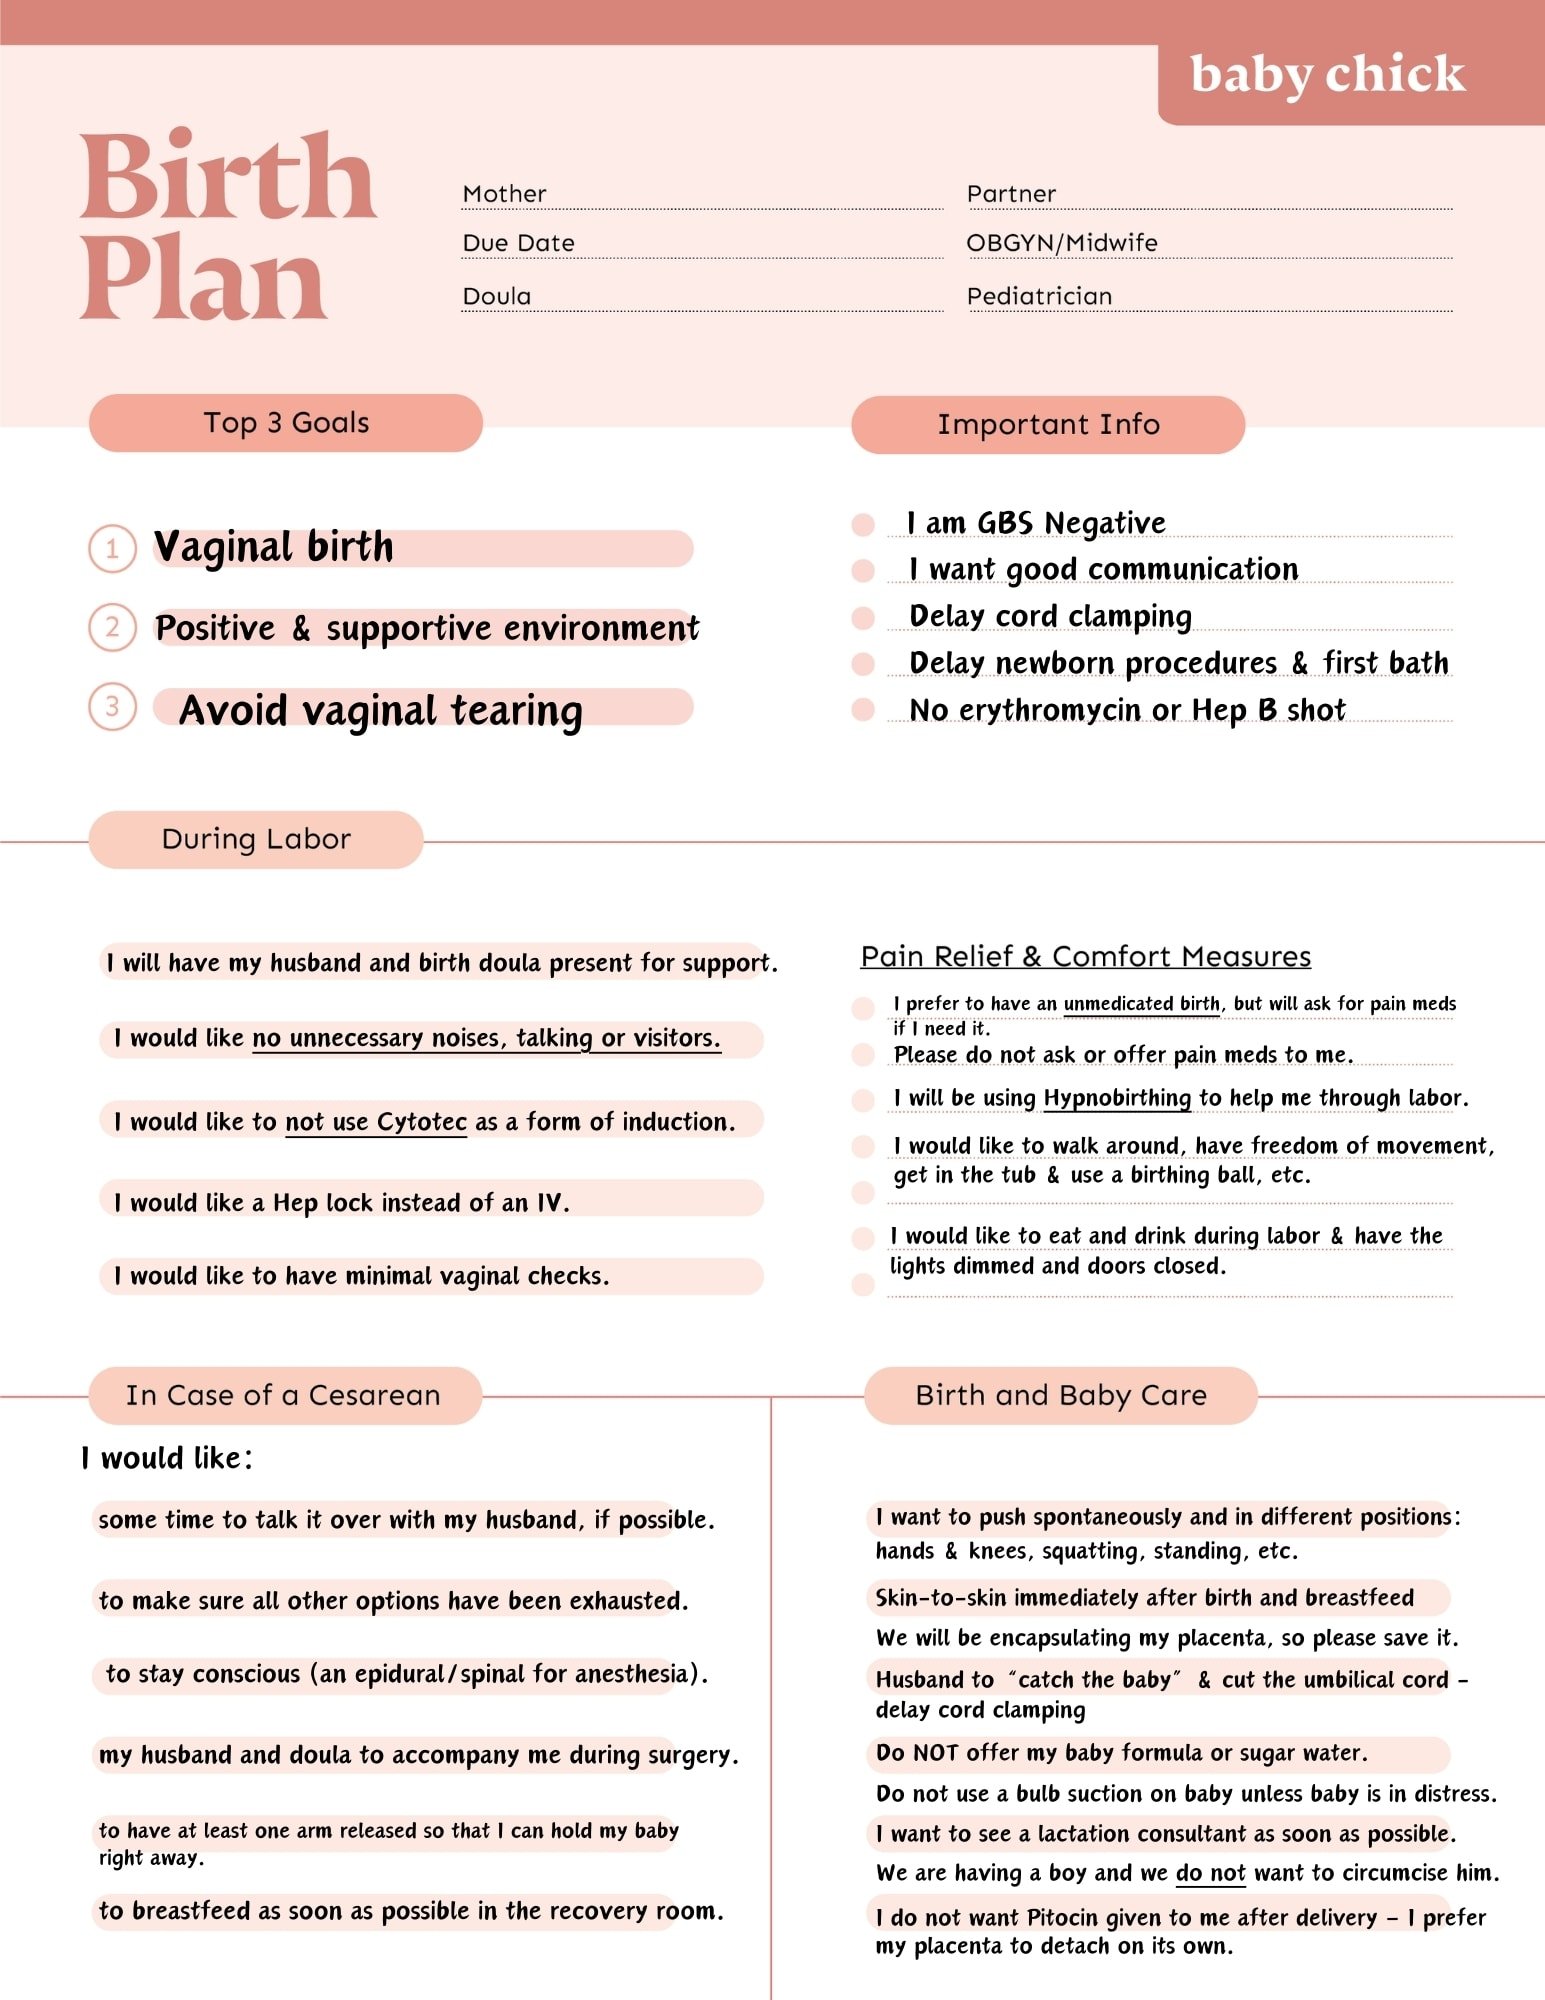 Birth plan example Unmedicated Birth #2